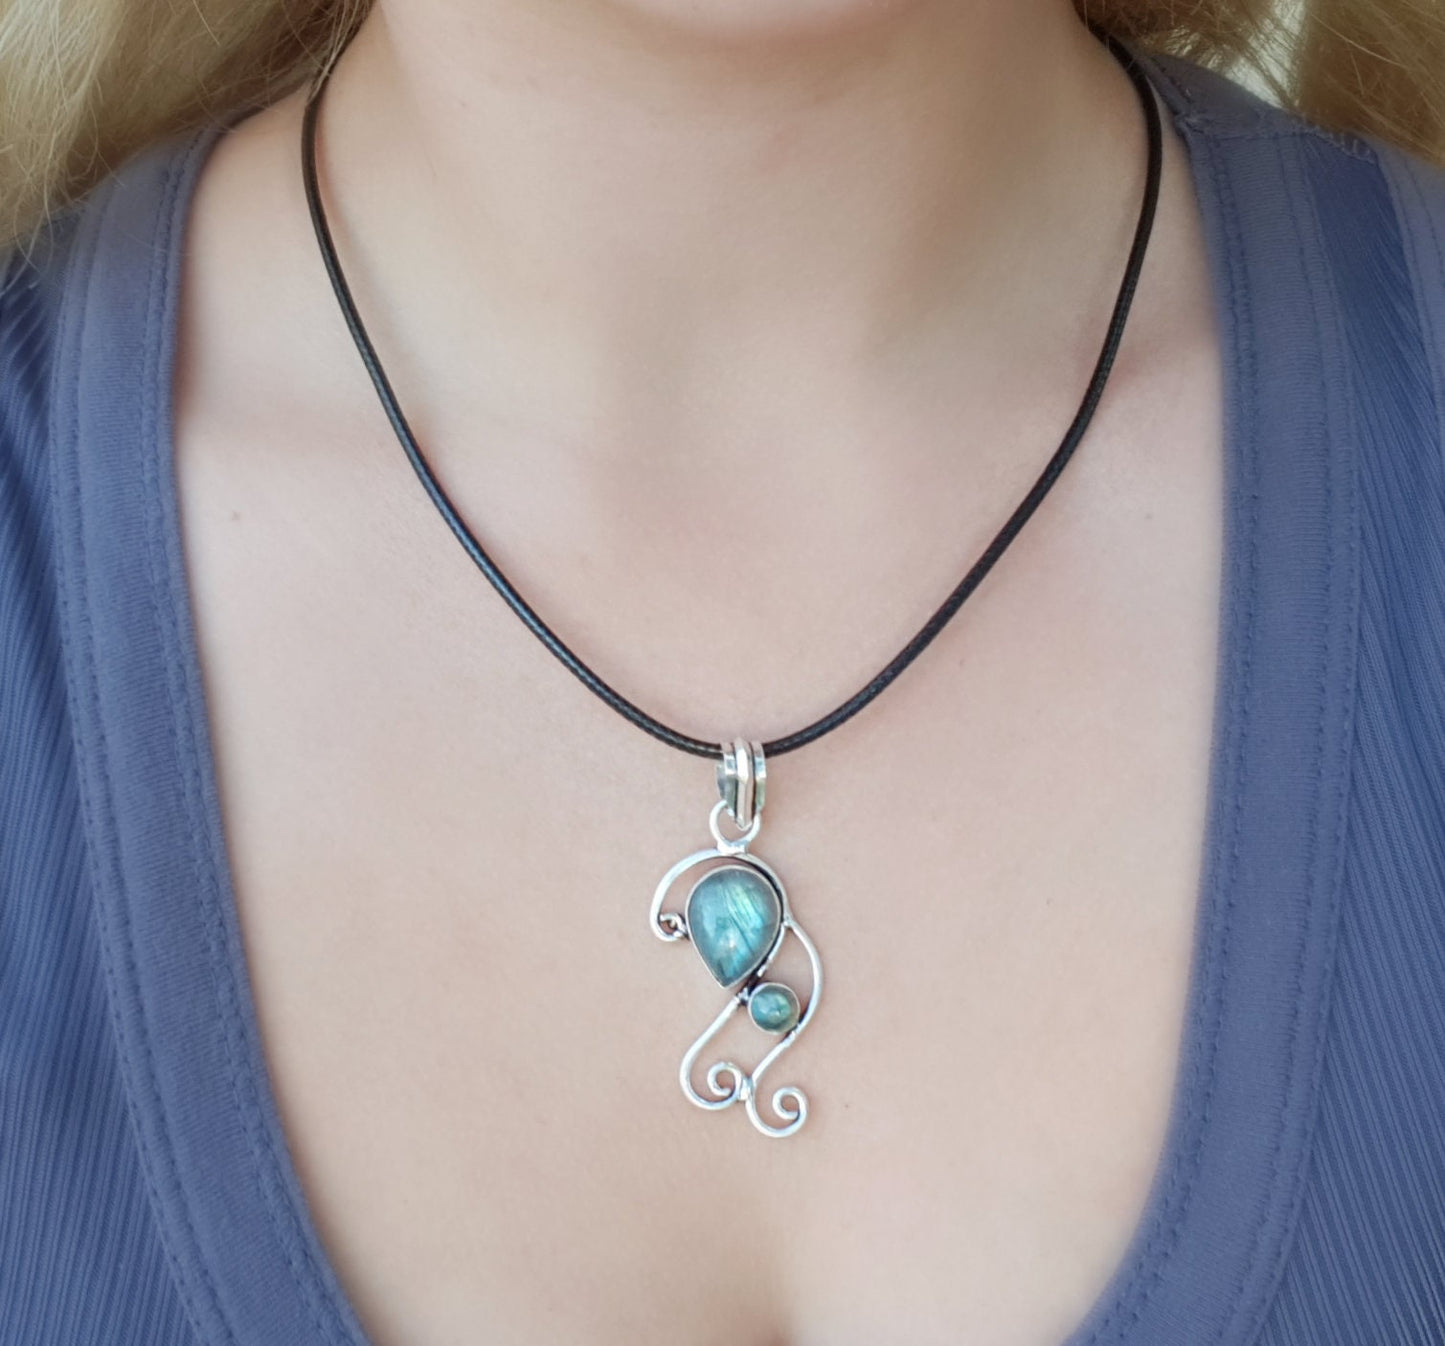 Elegant Labradorite Pendant In Sterling Silver Gemstone Necklace Boho Pendant Unique Gift For Women